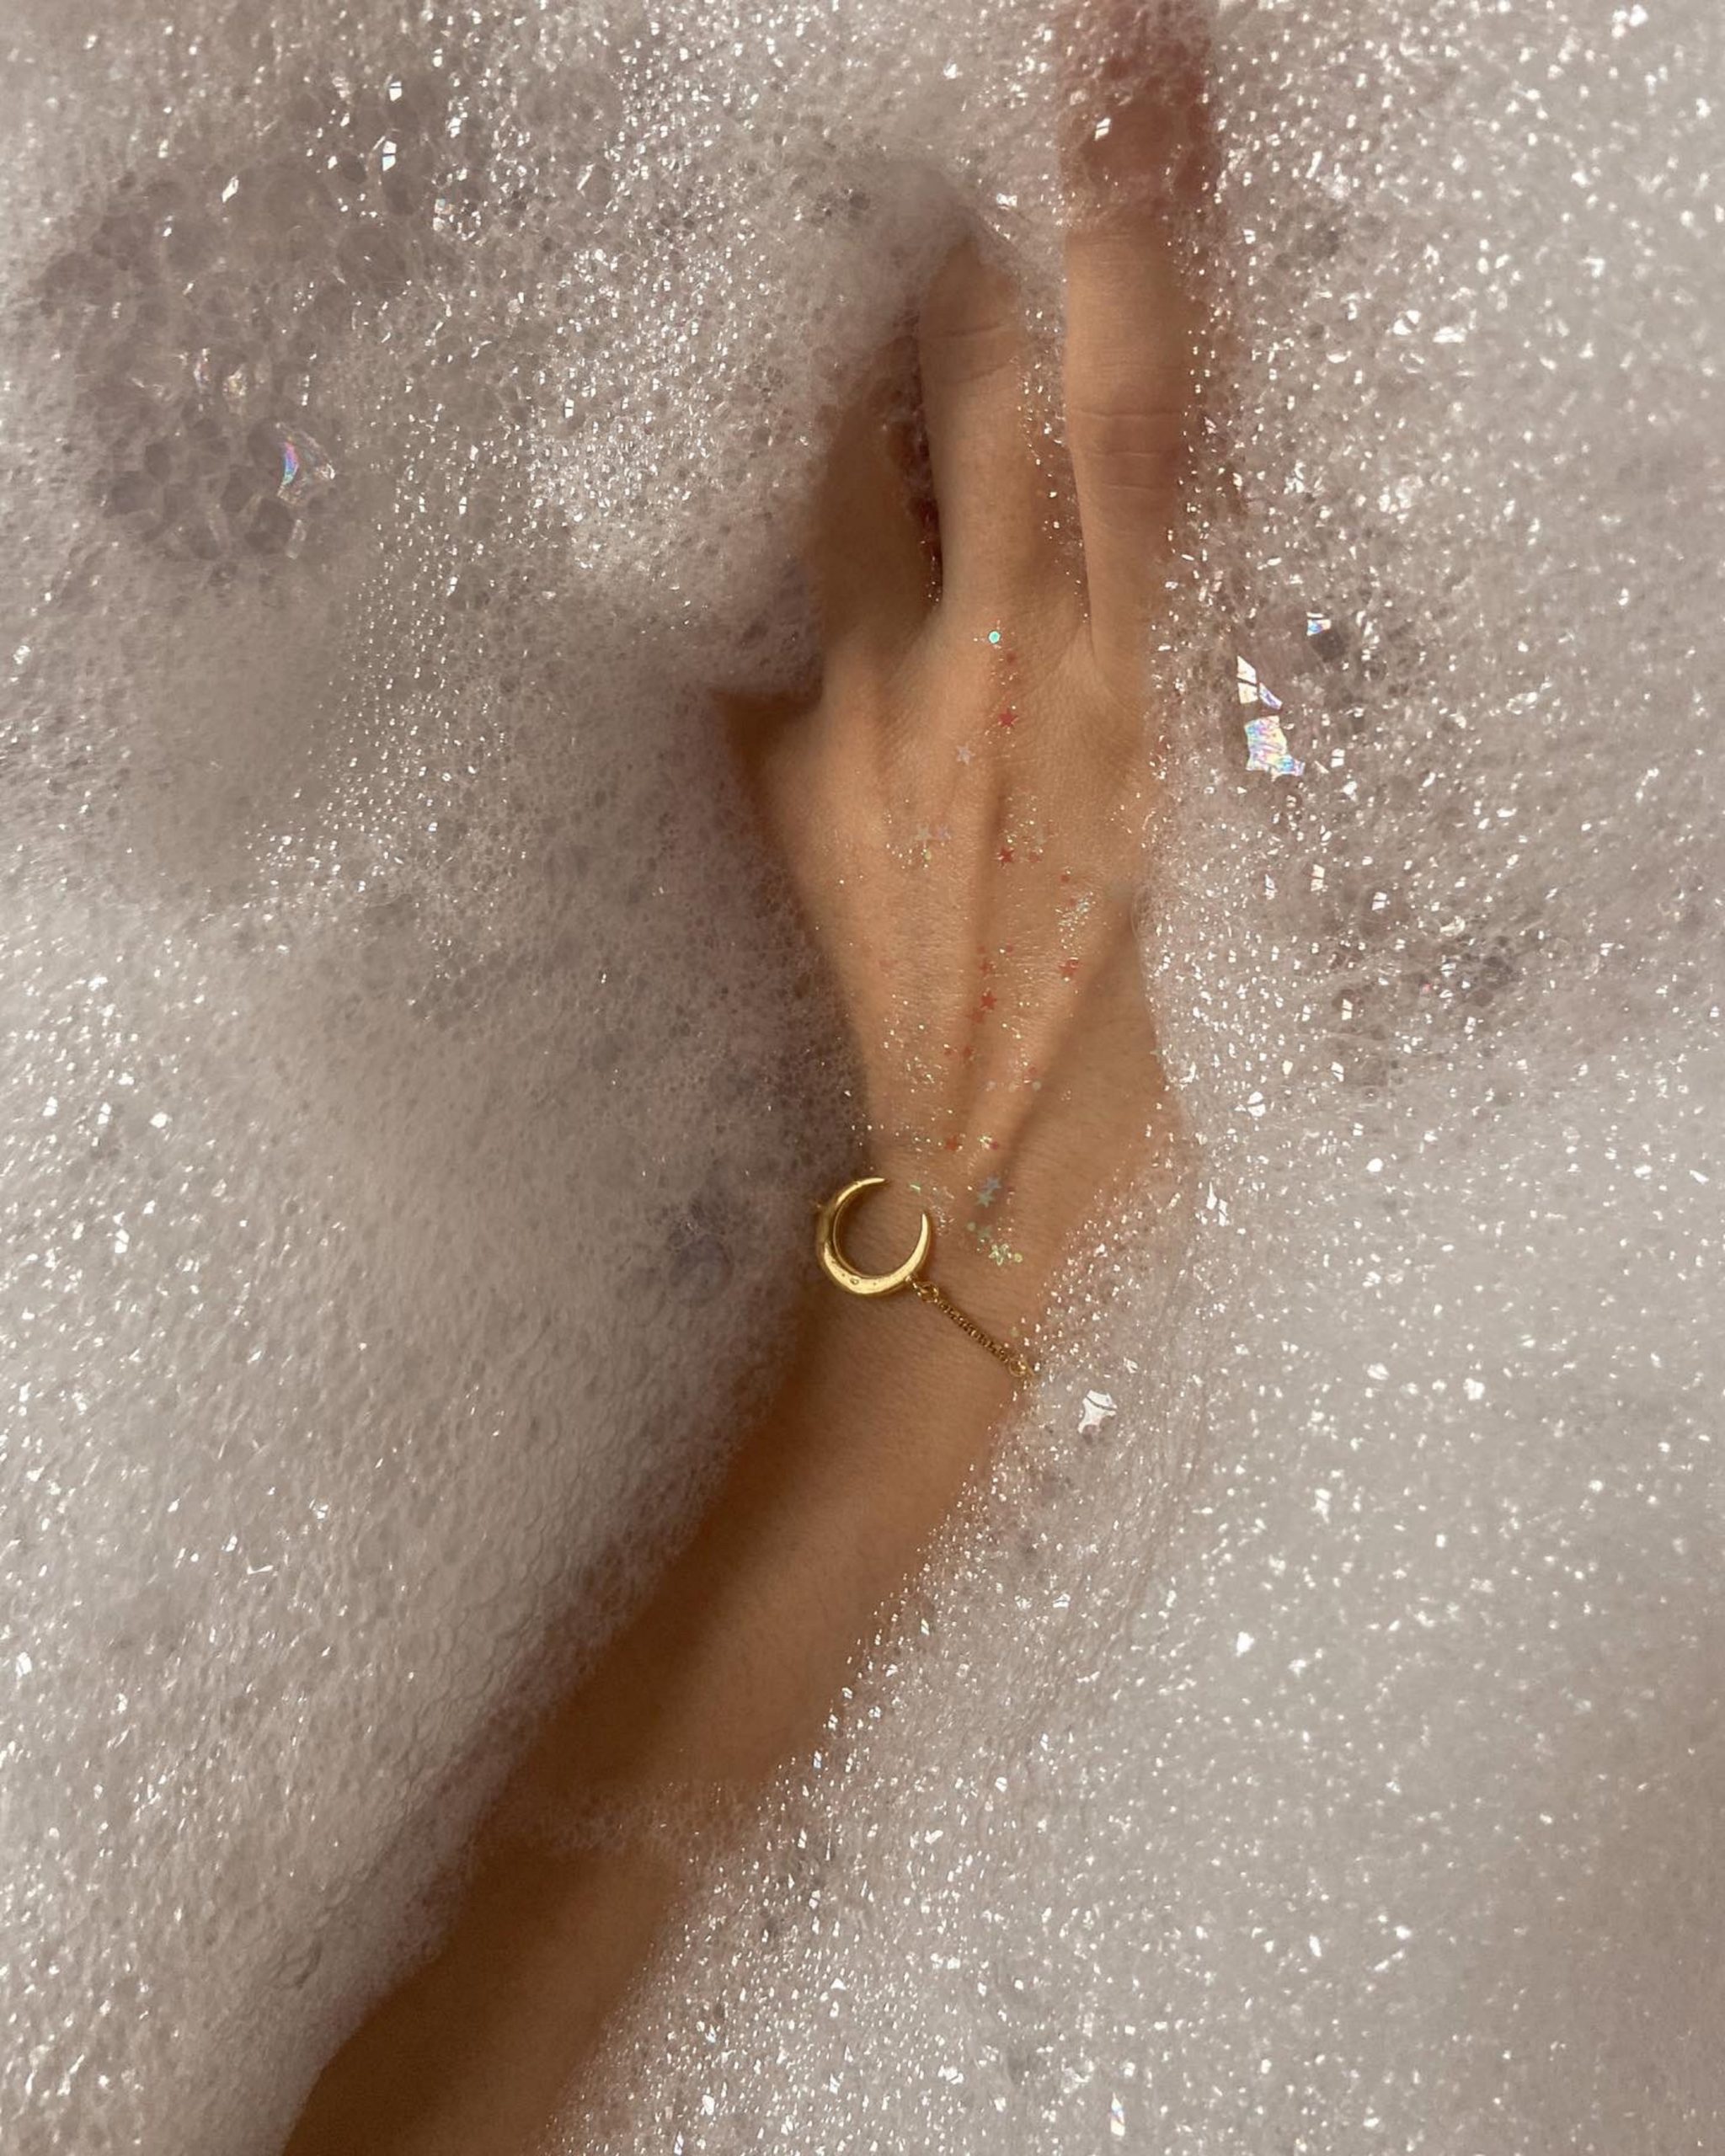 Top 3 Reasons WOD Welder Muscle Recovery Bath Bombs Work